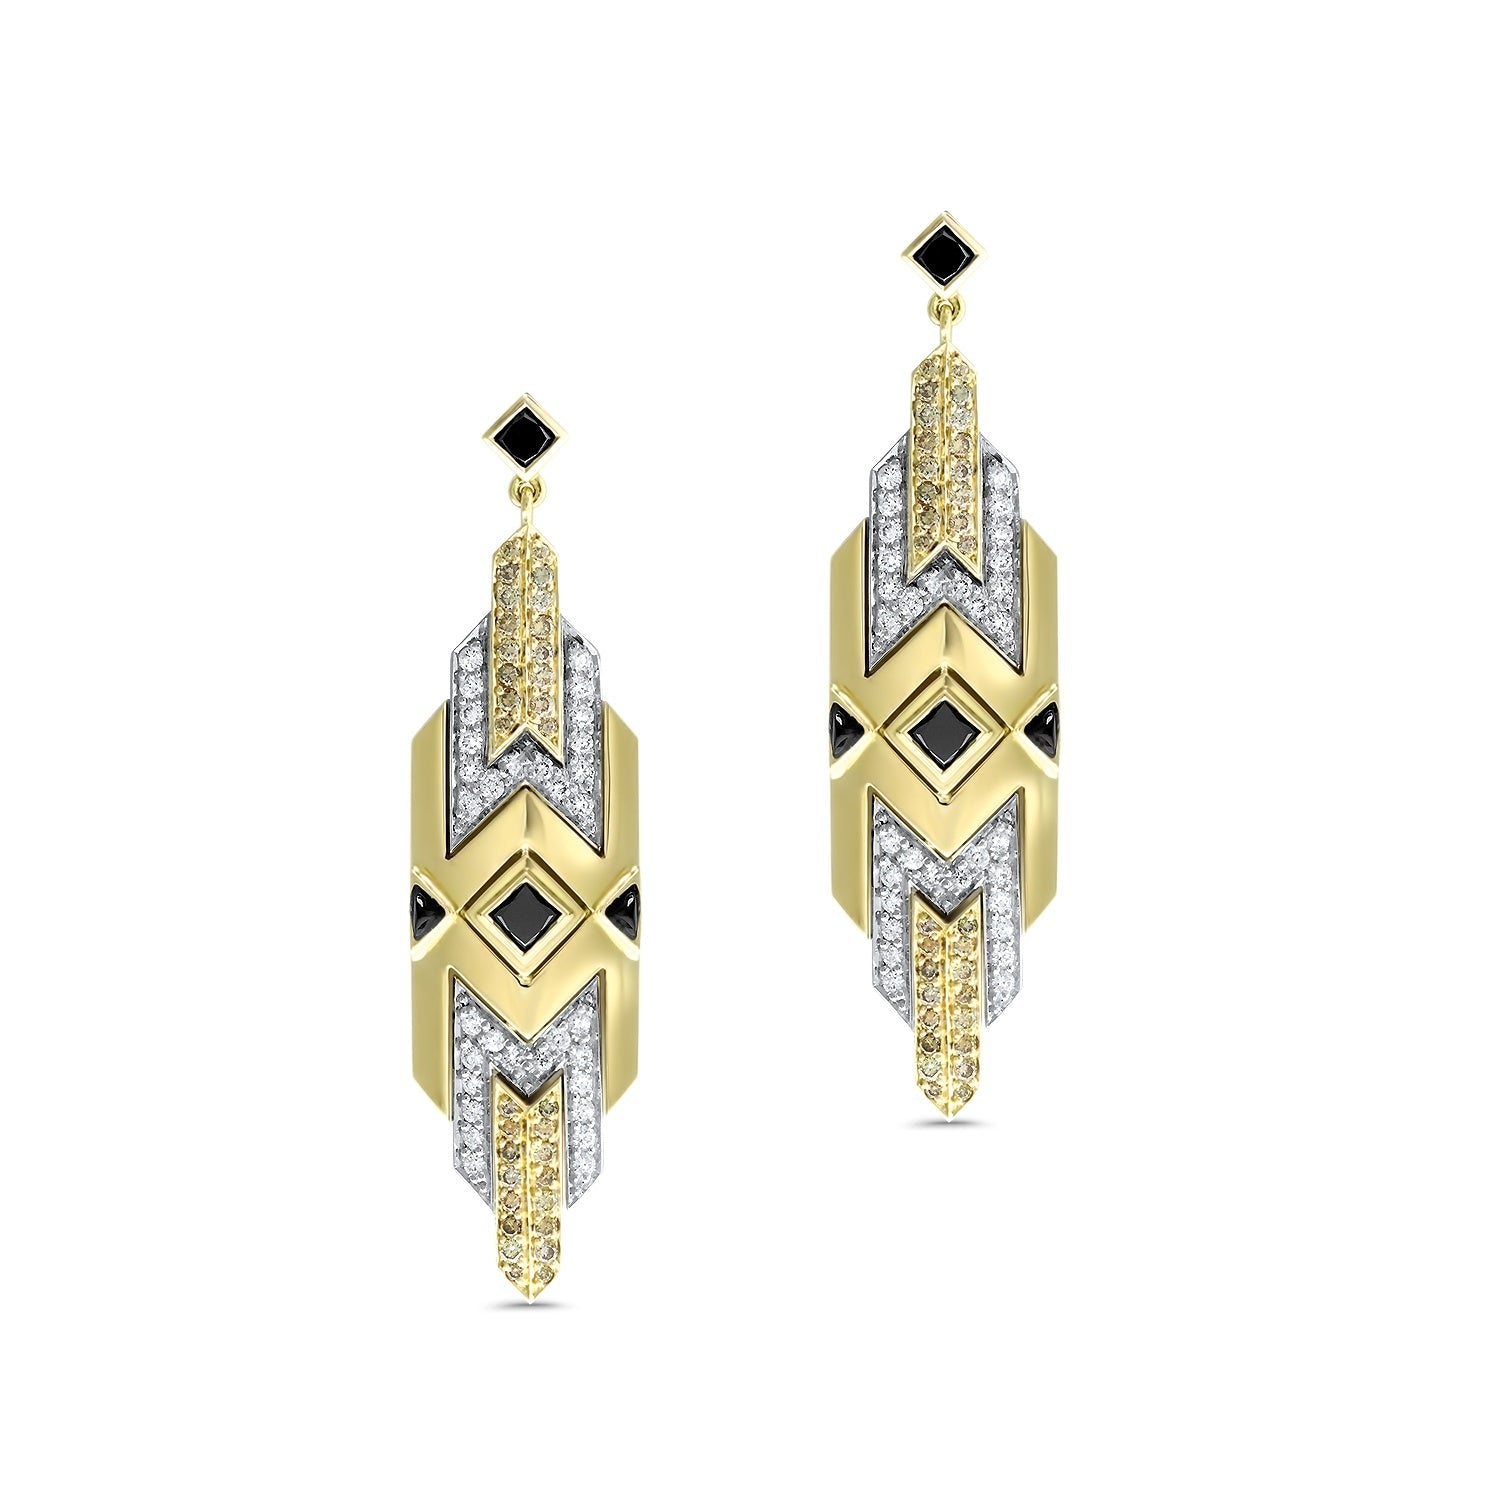 Art Deco drop earrings yellow gold, onyx and diamonds